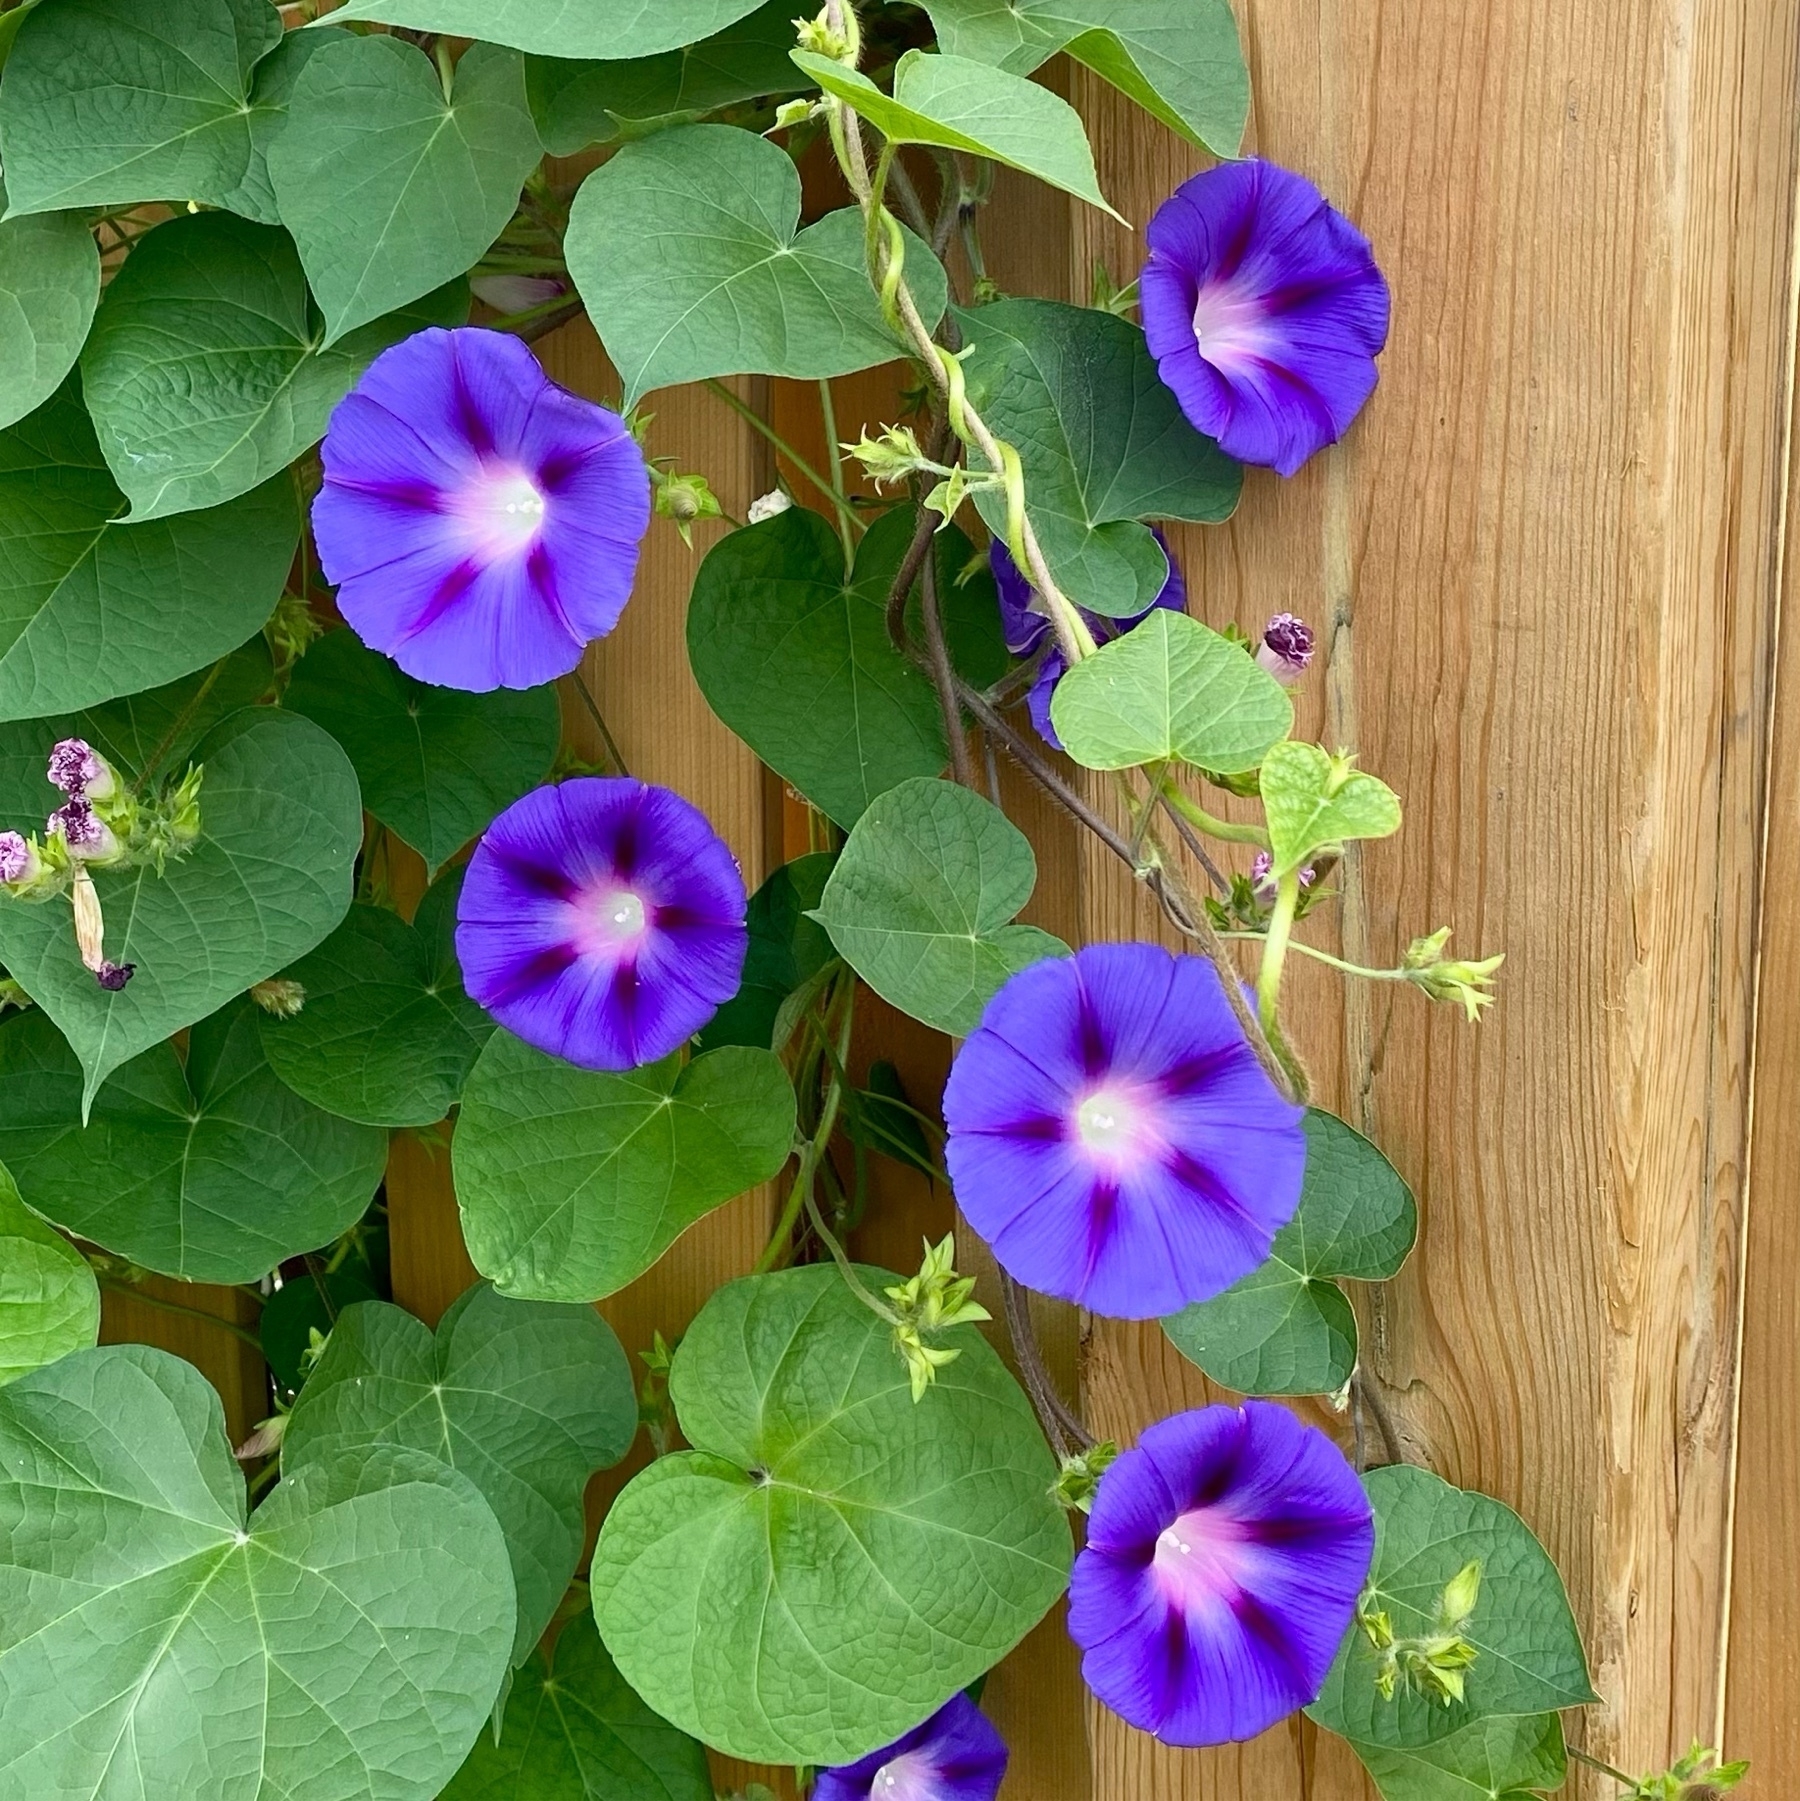 purple morning glory flowers climbing the fence